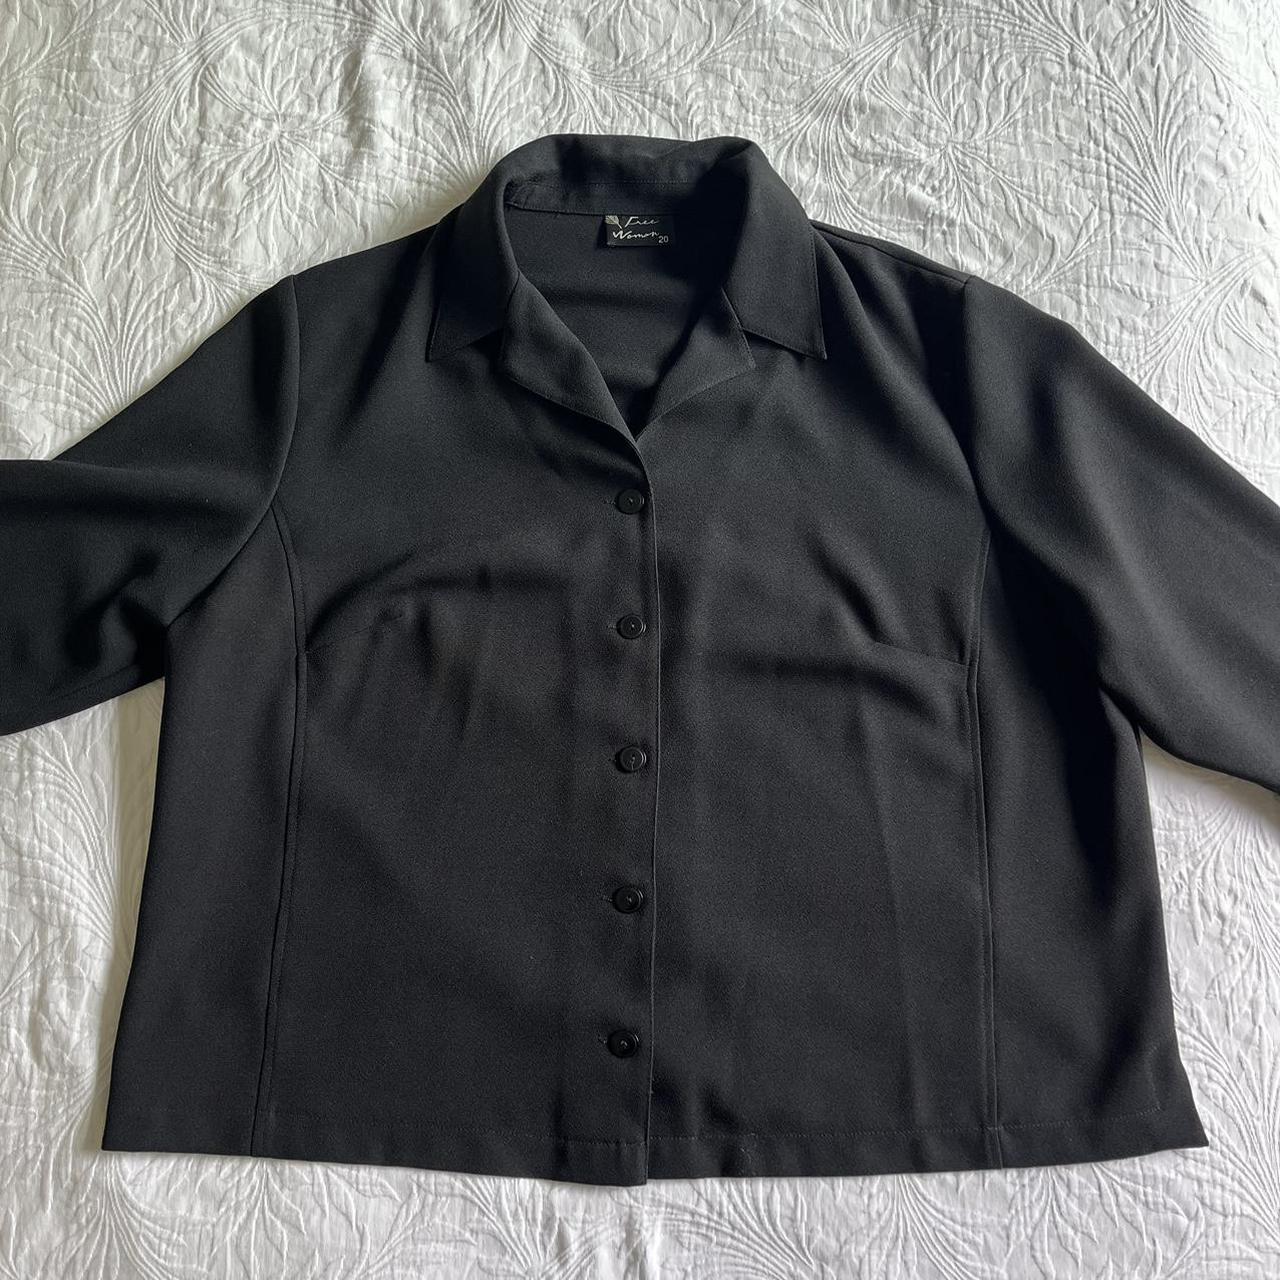 Made in Australia. Vintage black button up shirt.... - Depop